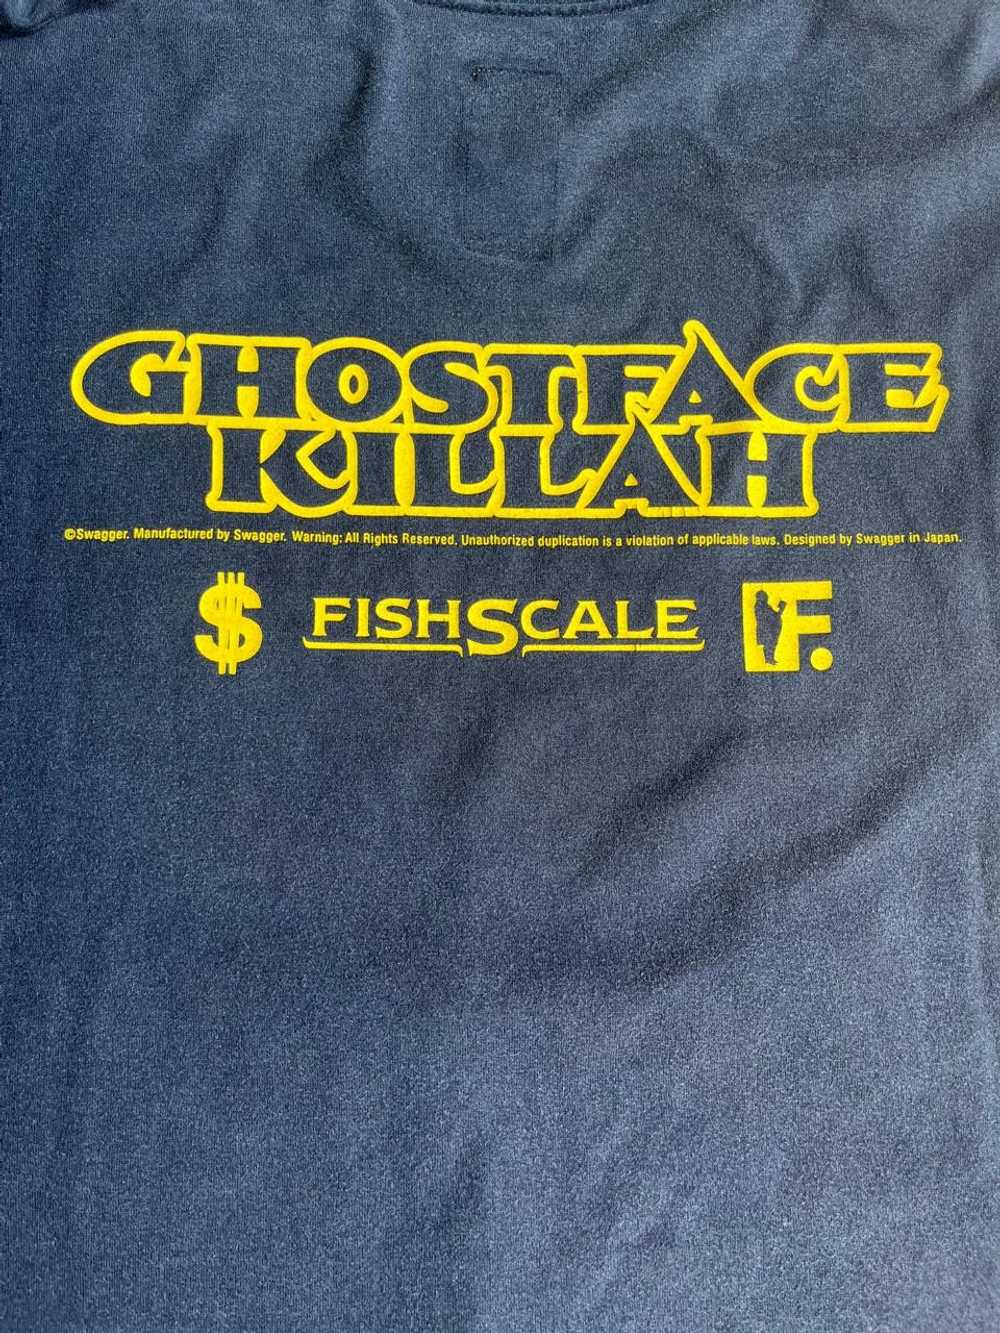 Wutang Ghostface Killah Fishscale Promo Album - image 3